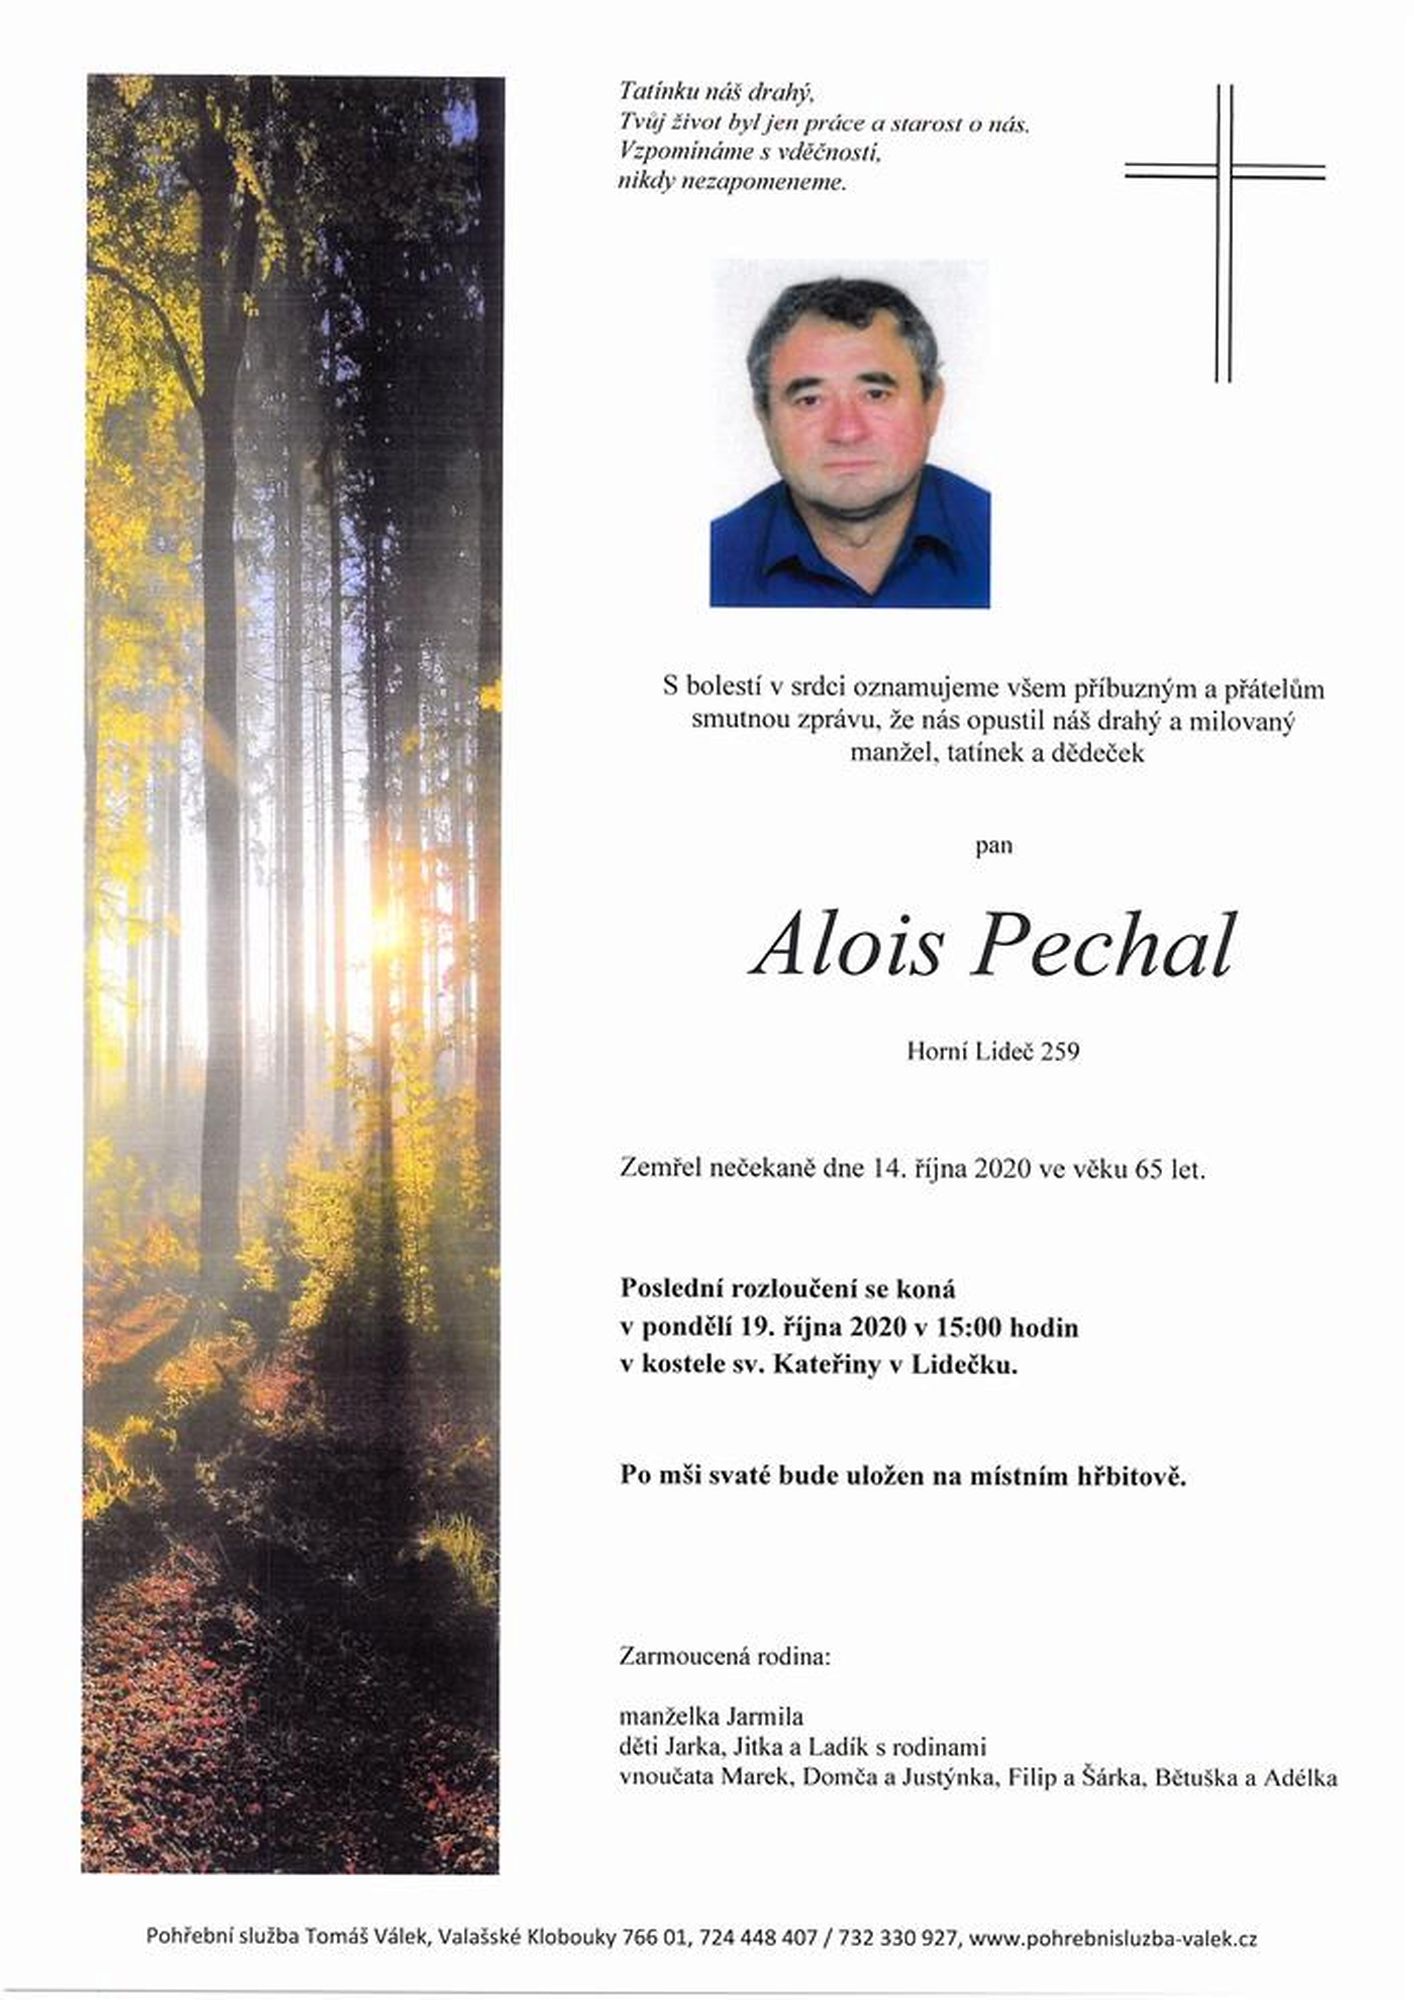 Alois Pechal